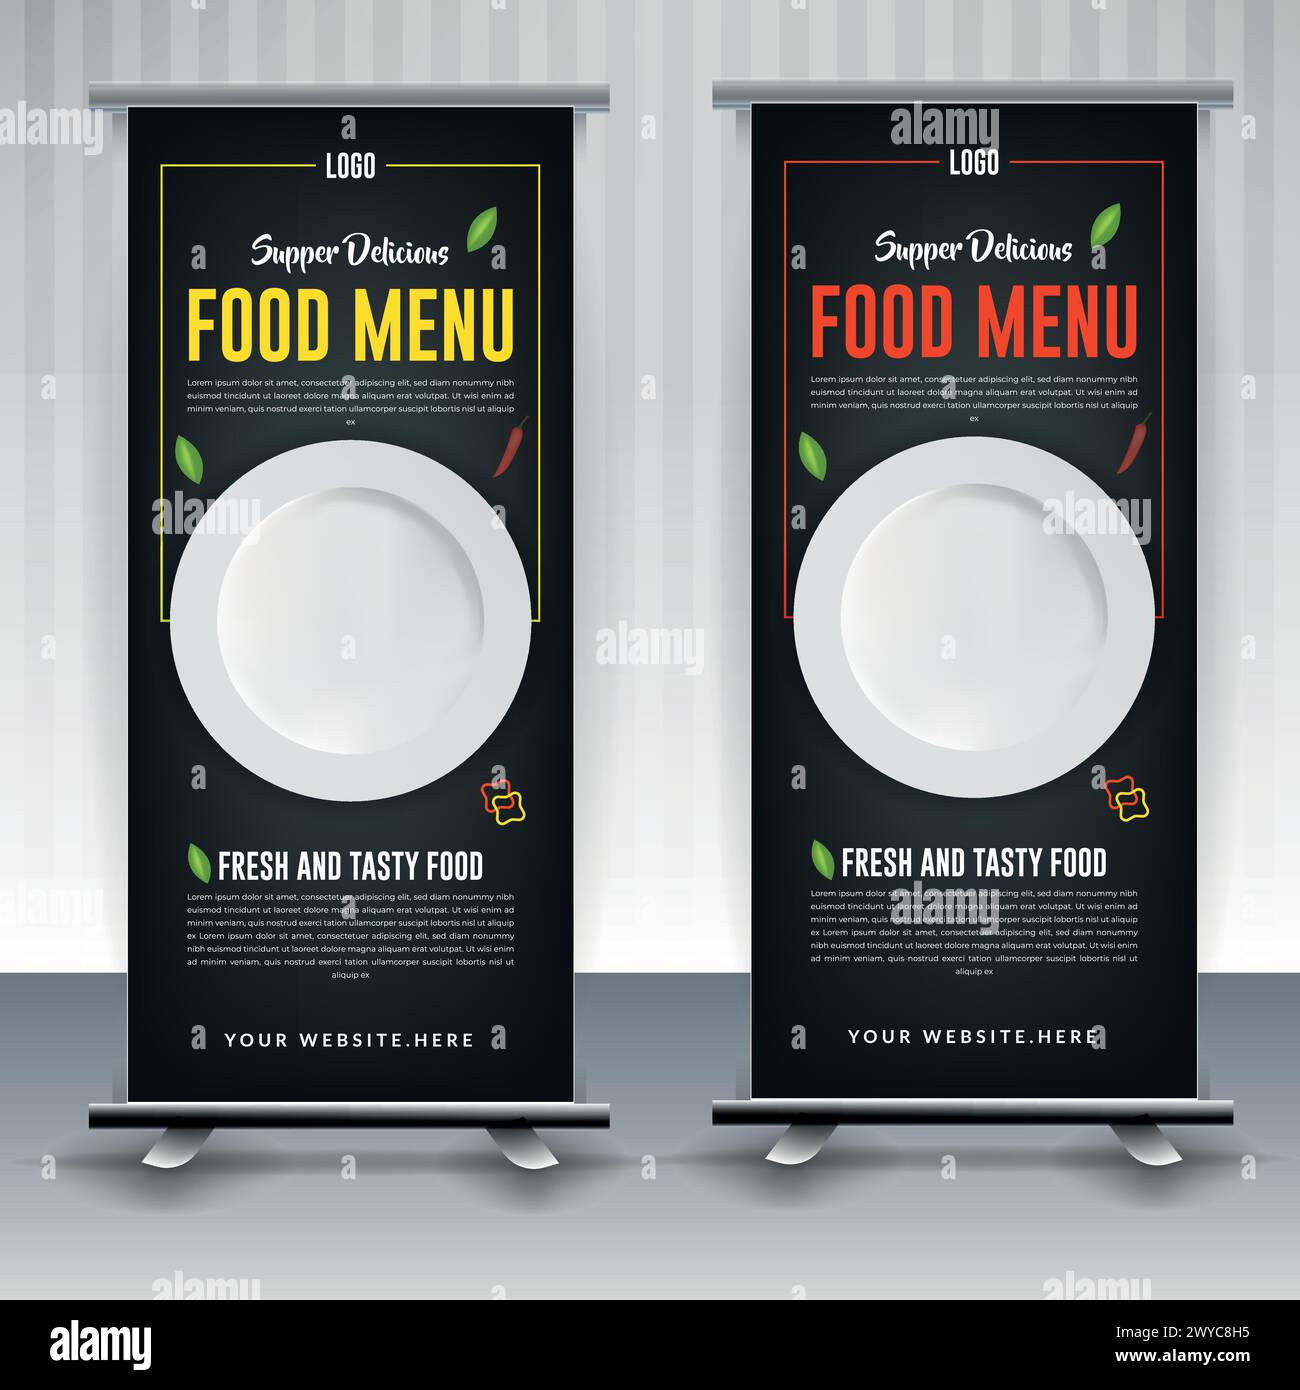 Food menu and restaurant Modern food rollup banner design. Stock Vector